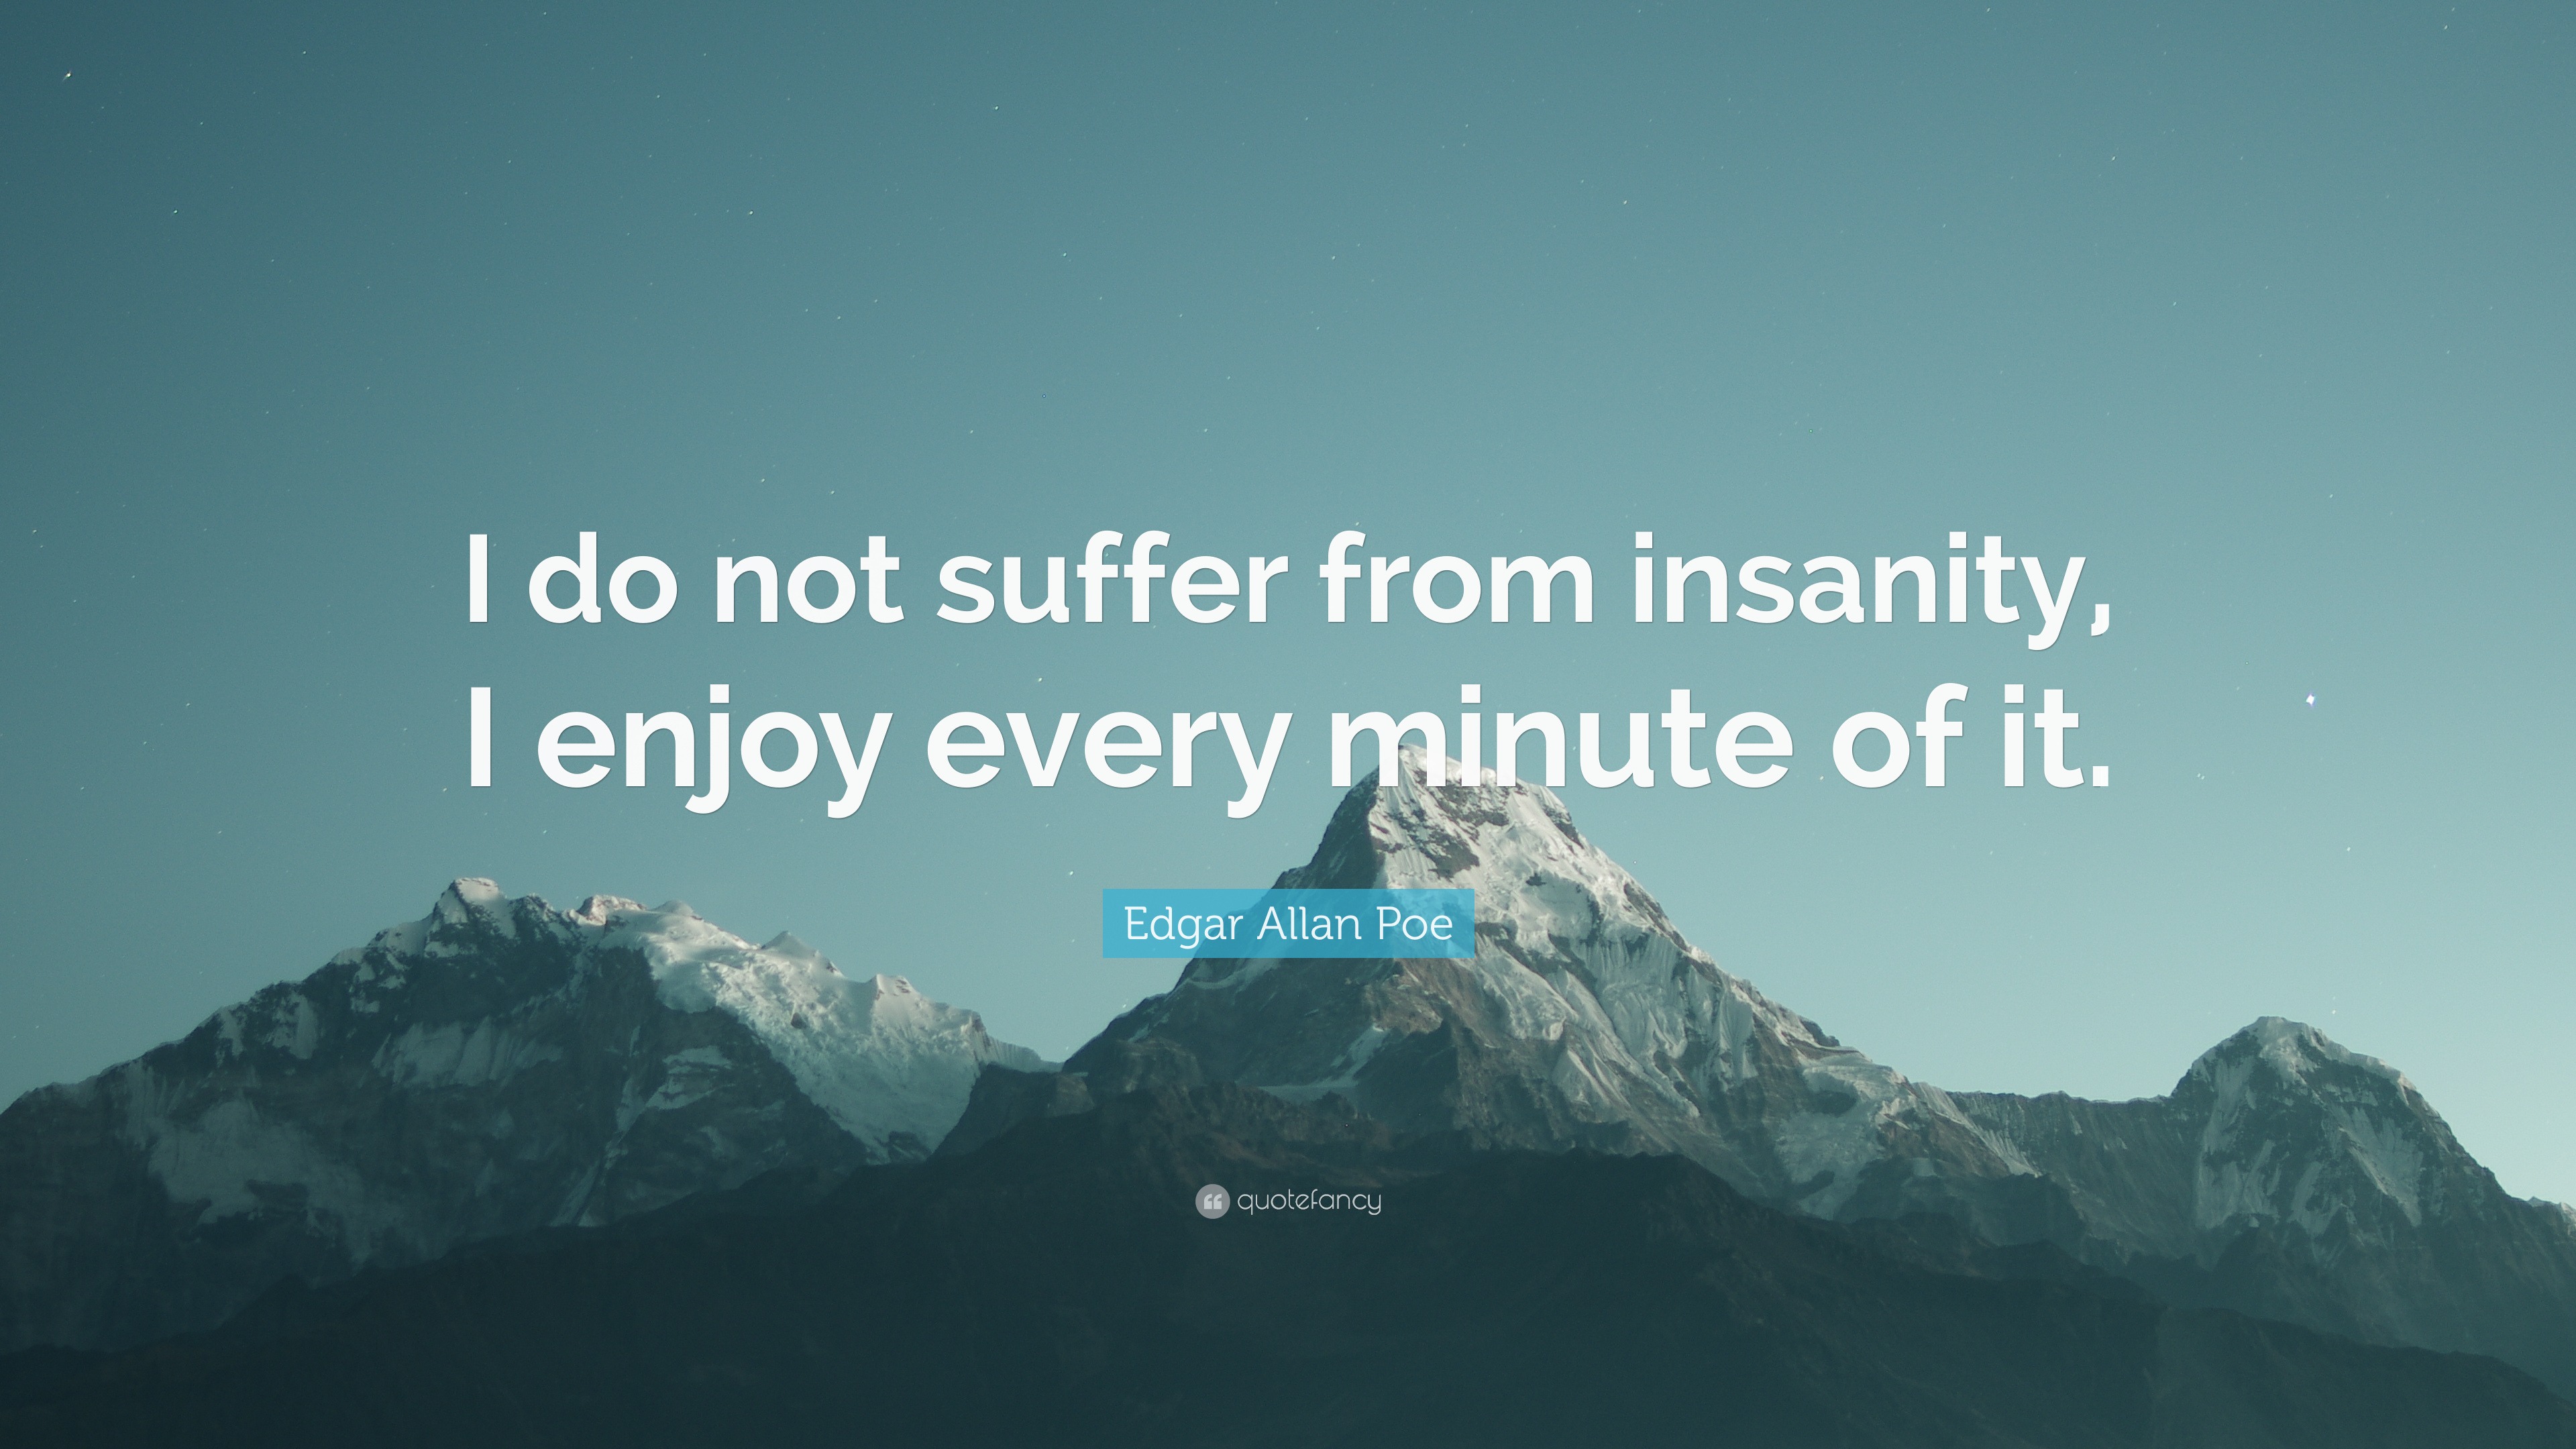 edgar allan poe quotes on insanity